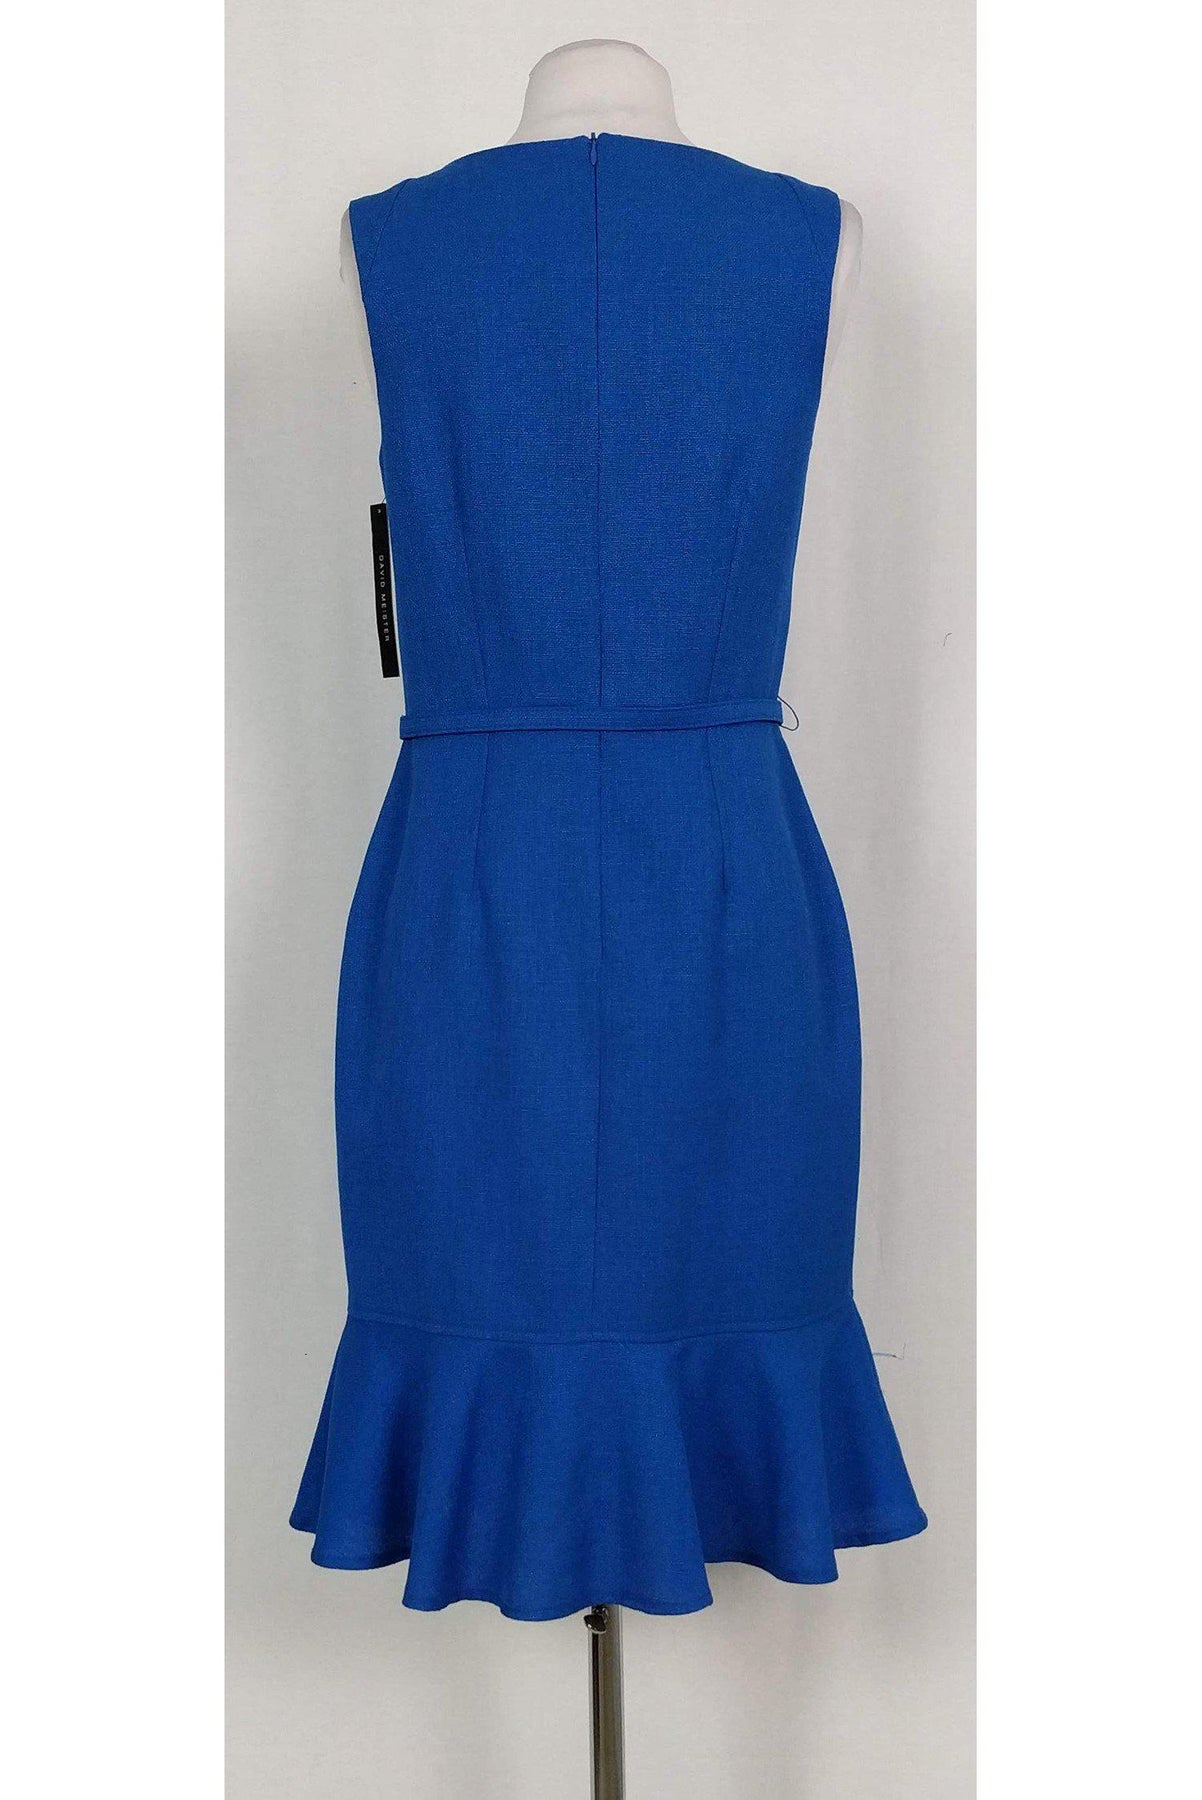 David Meister - Bright Blue Amanda Textured Dress Sz 4 – Current Boutique